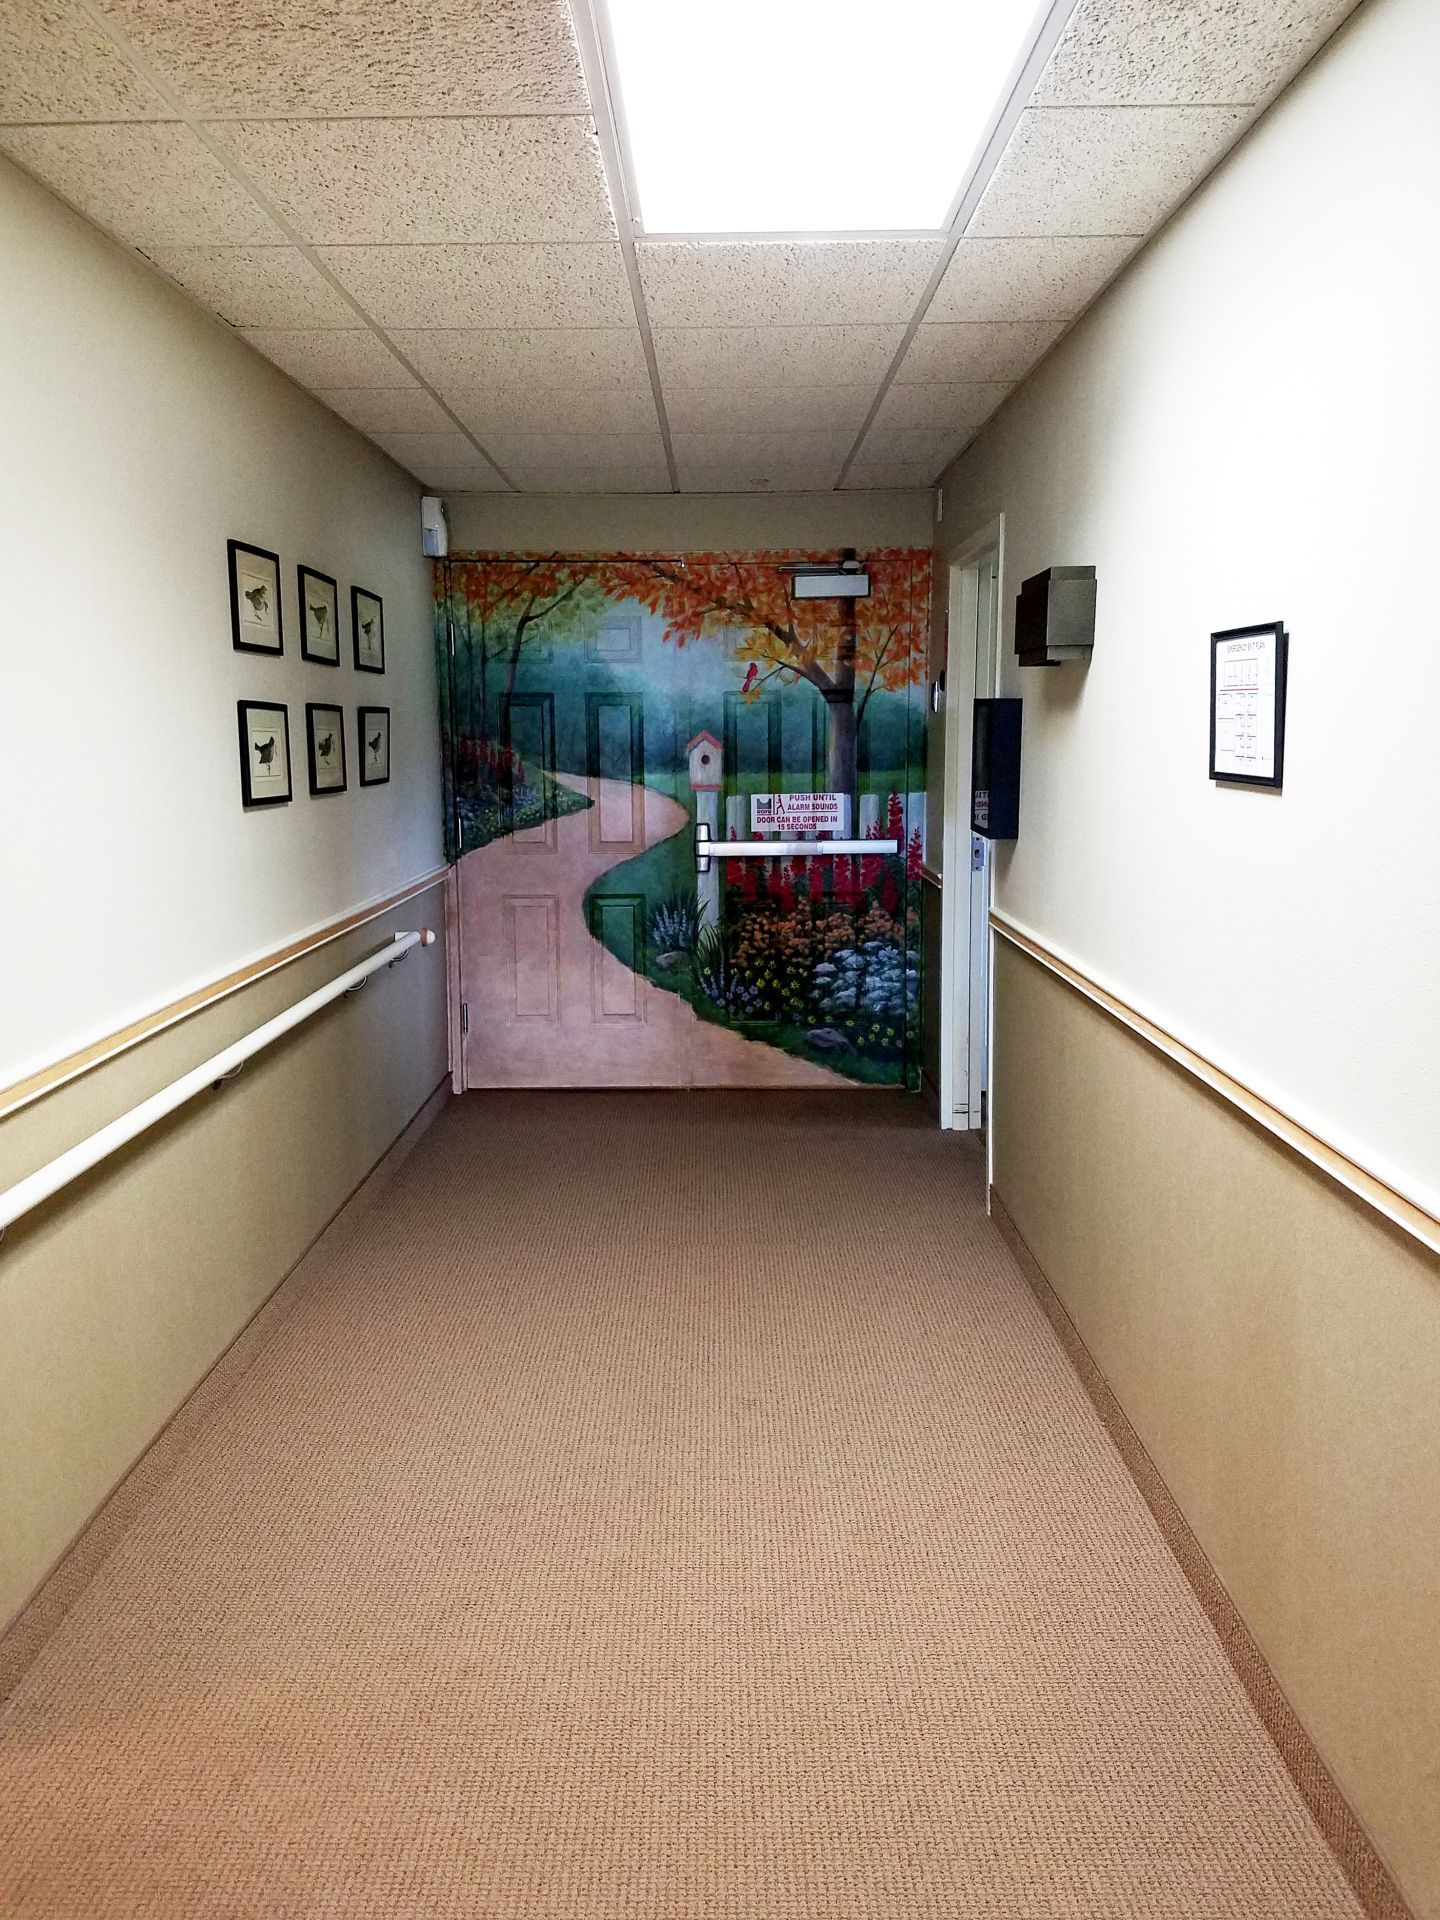 Interior view of Courtyard Estates Of Bushnell senior living community featuring art-filled hallways.